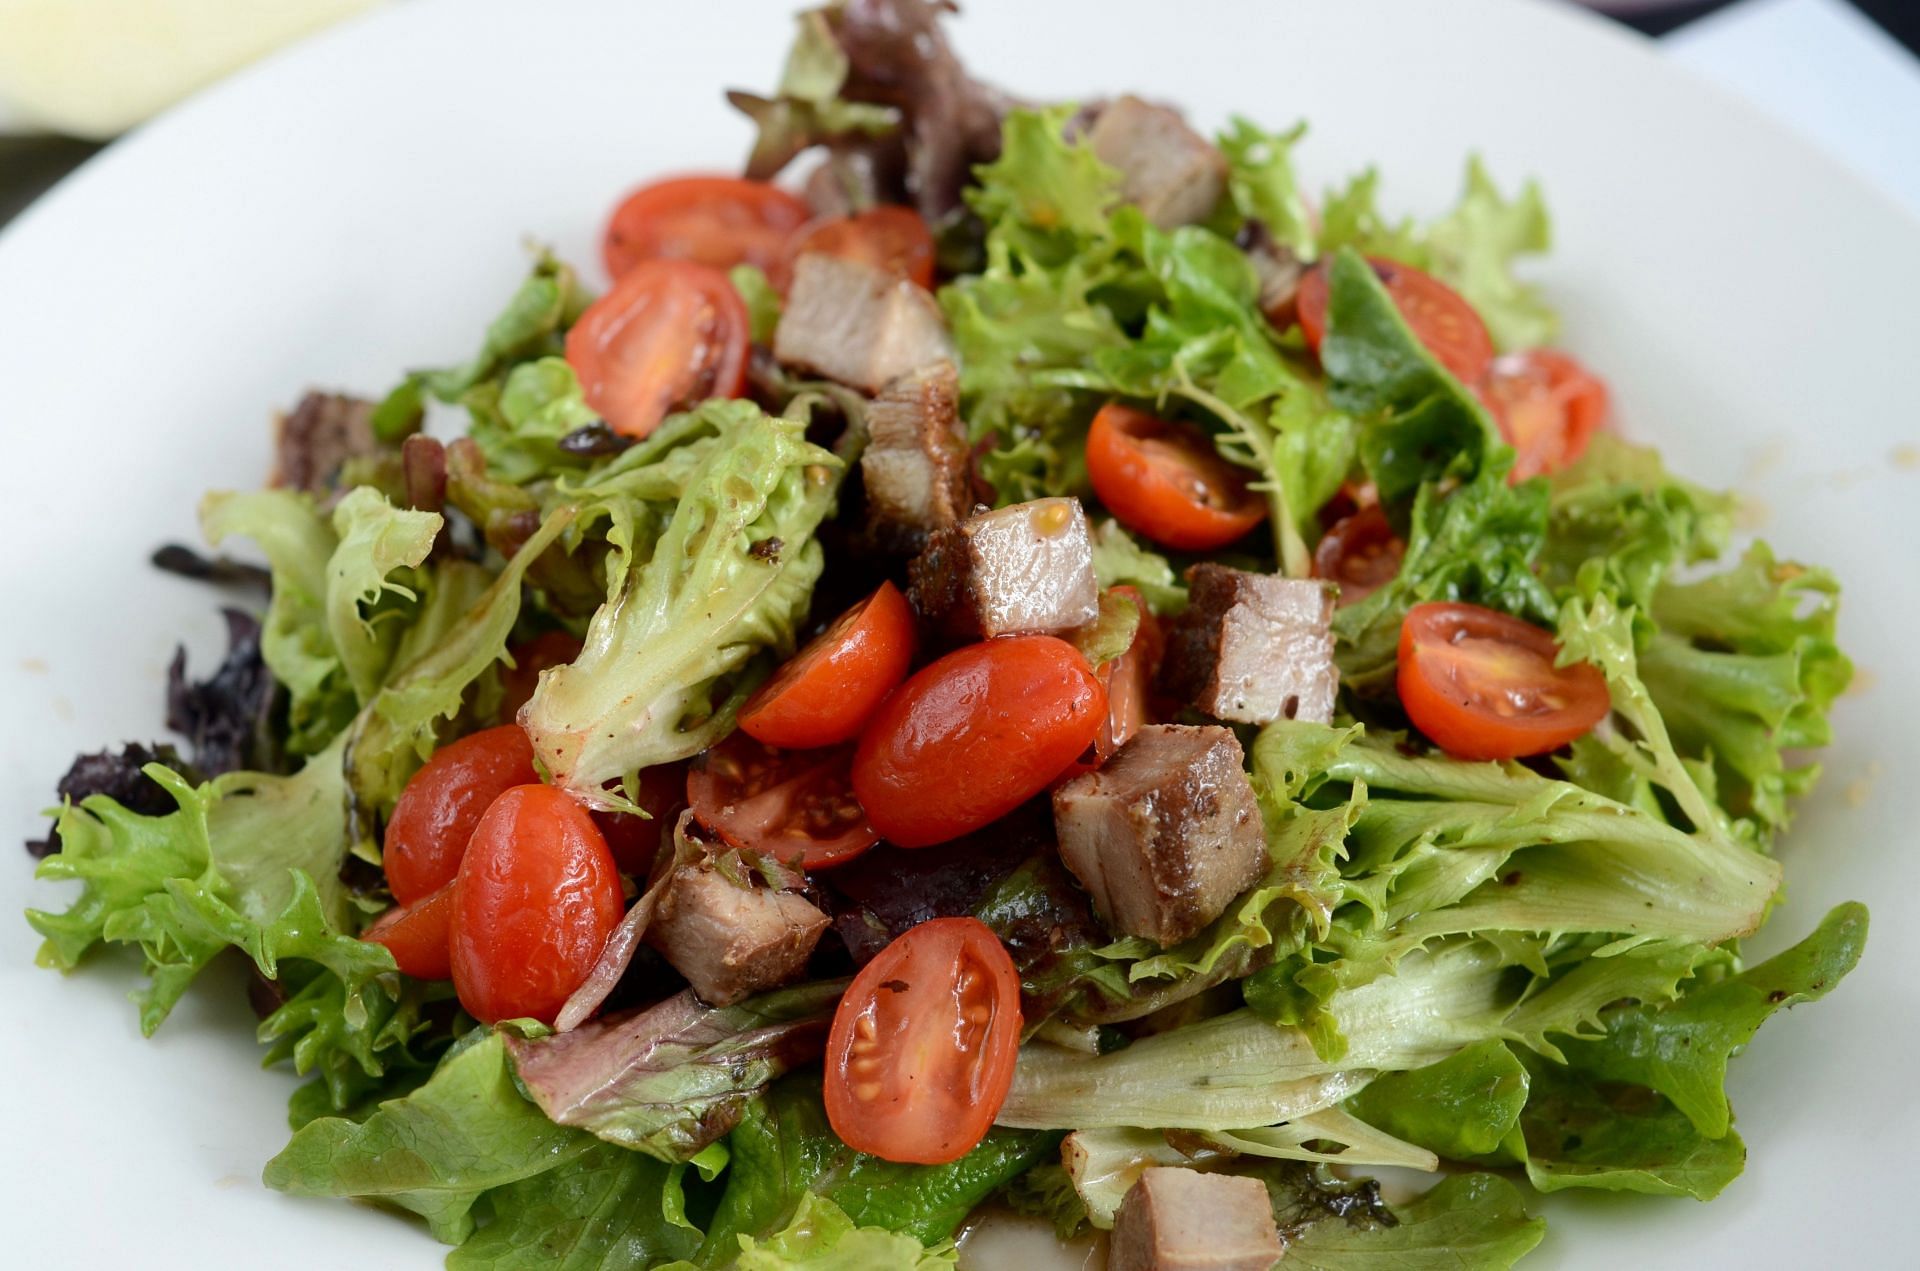 Salads for optimal health (Image source/ Pexels)